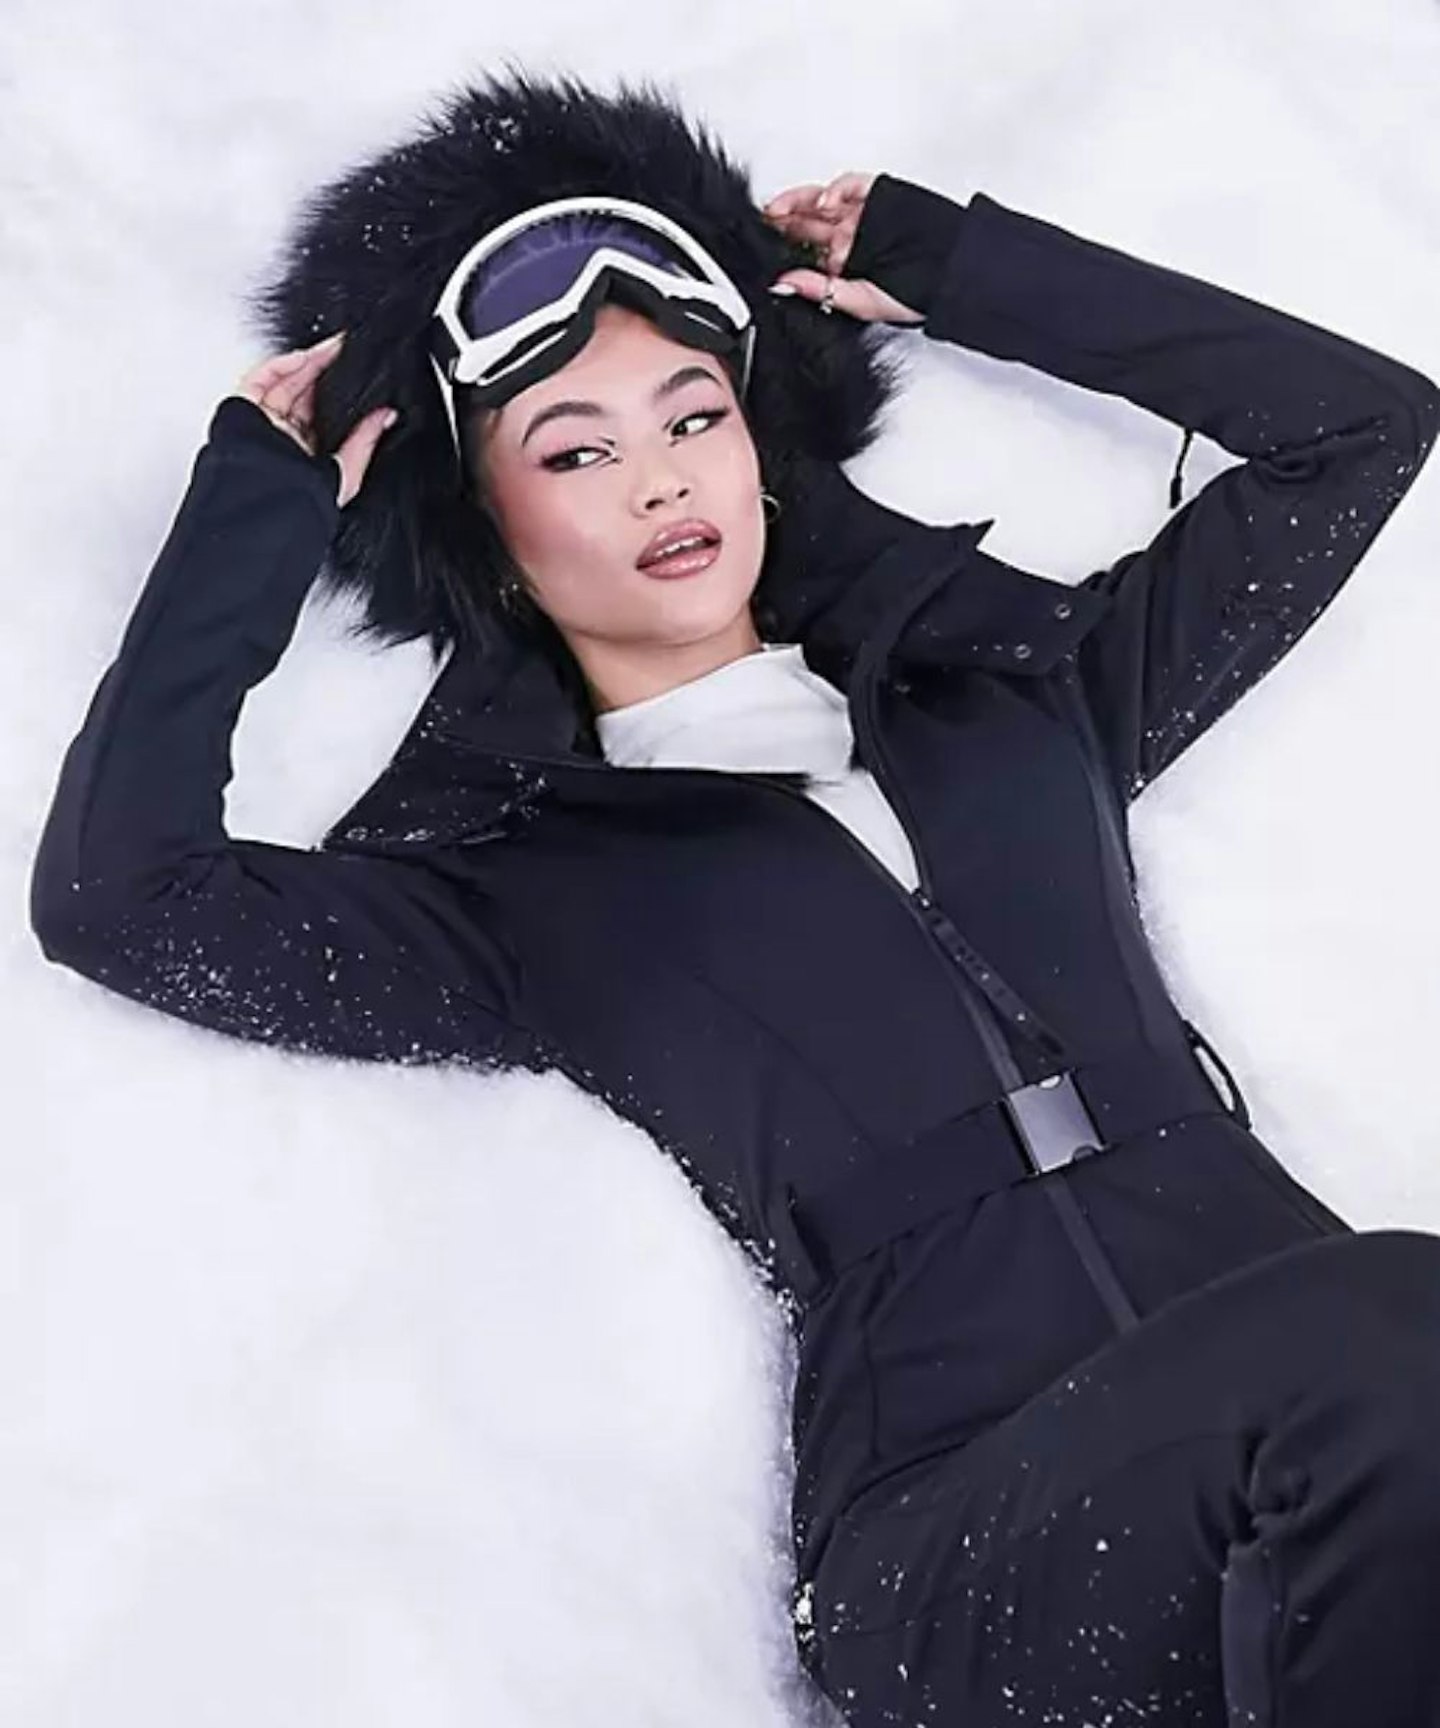 ASOS 4505 ski belted ski suit with slim kick leg and faux fur hood